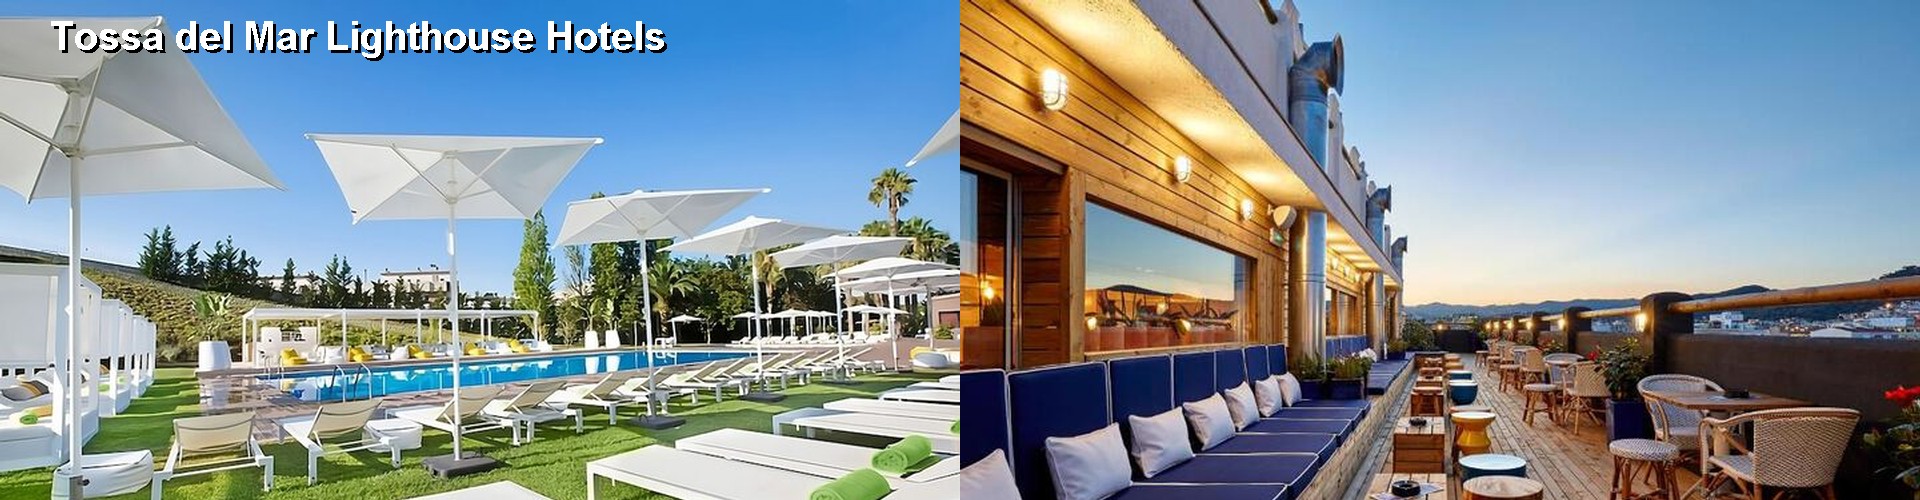 5 Best Hotels near Tossa del Mar Lighthouse